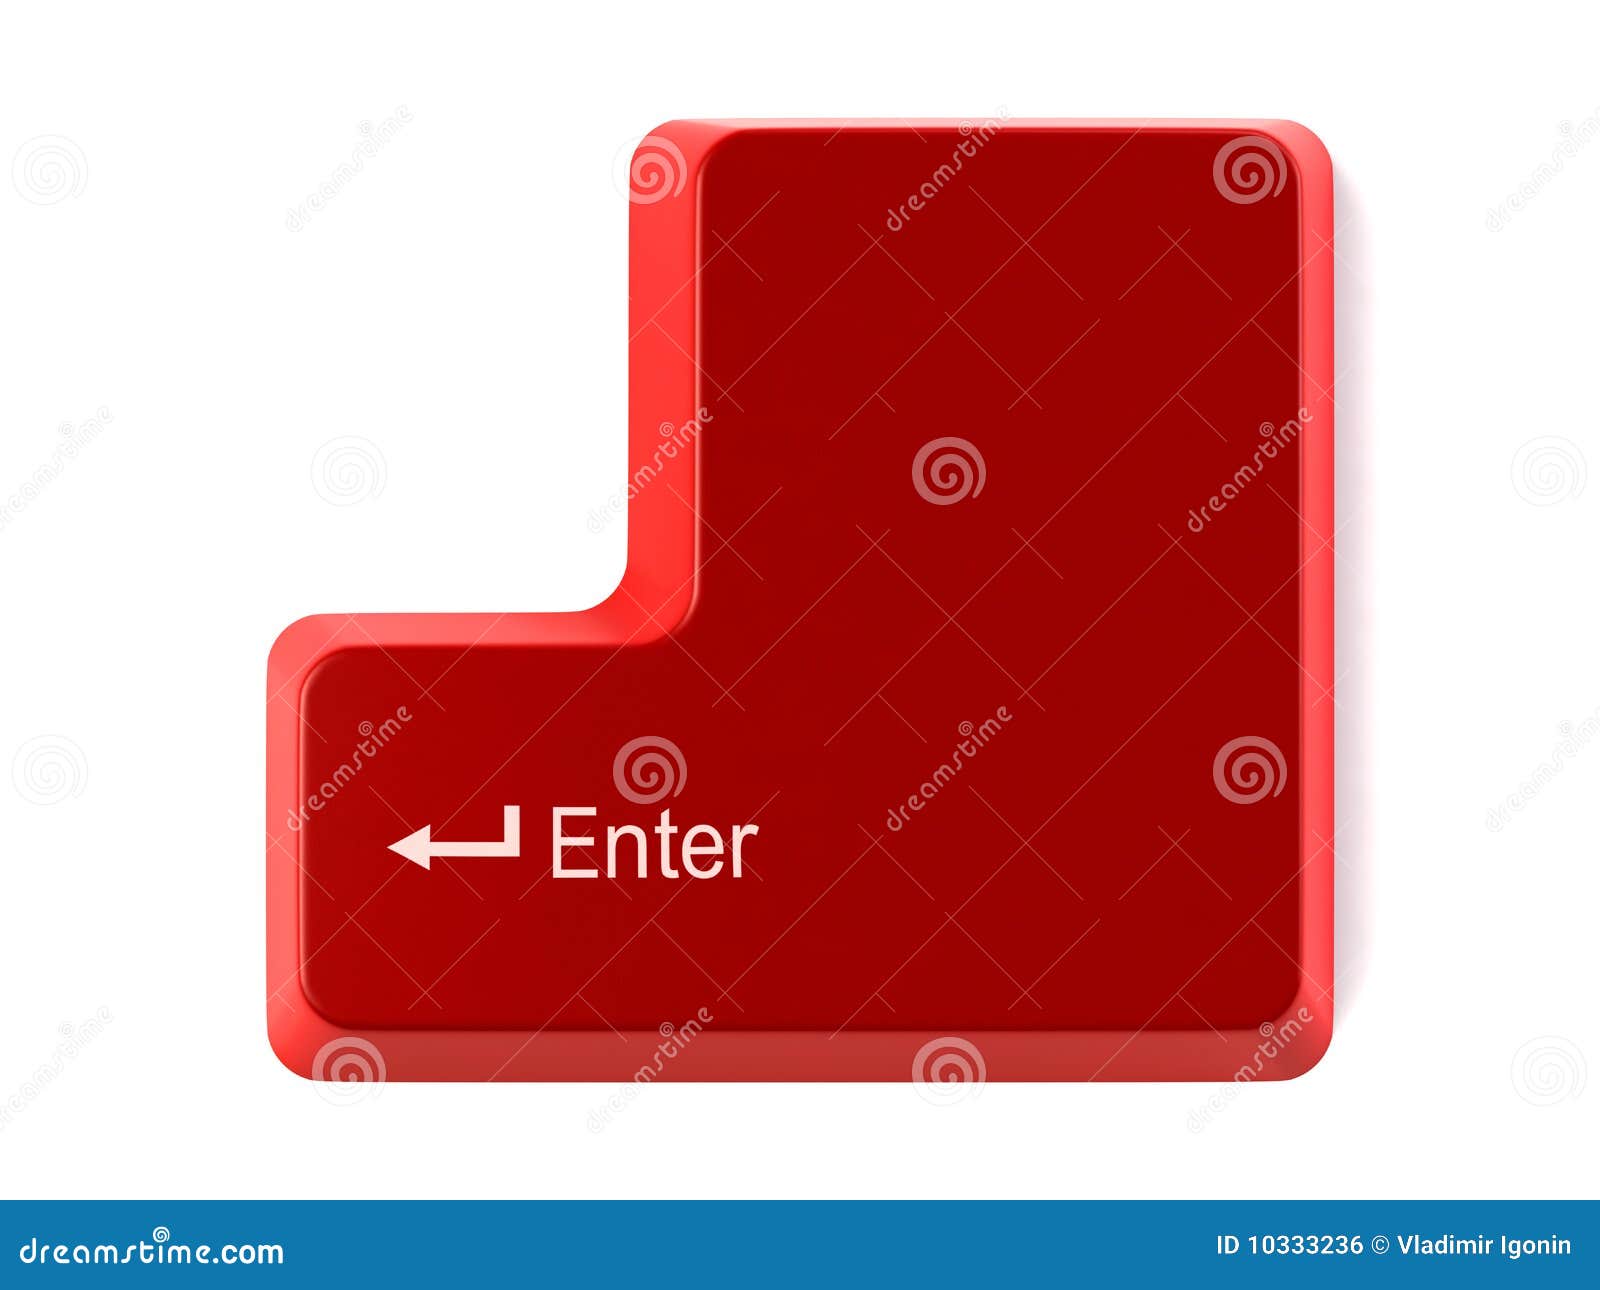 enter key clipart - photo #20